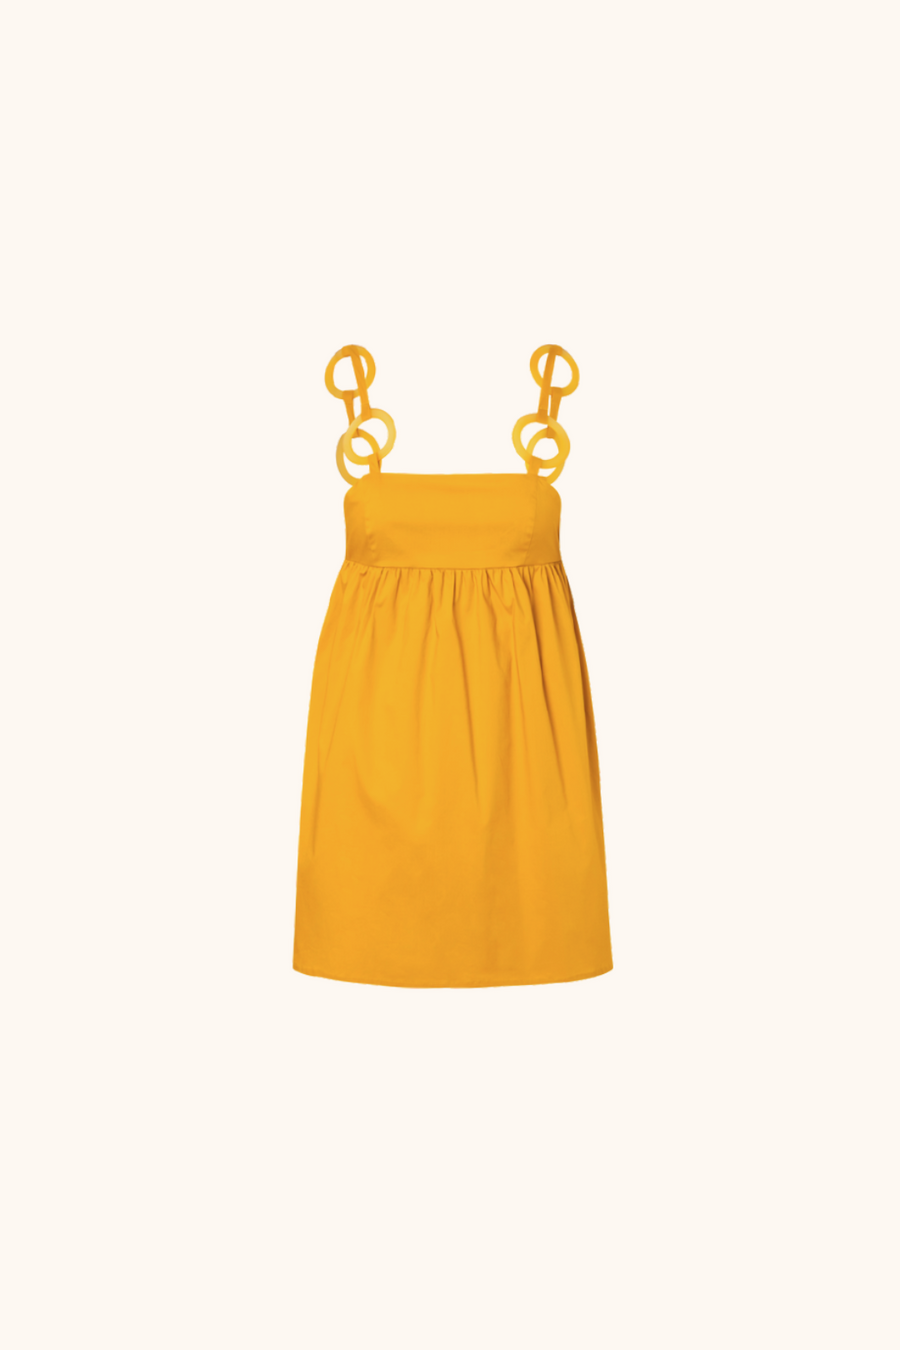 Bahama Yellow Mini Dress